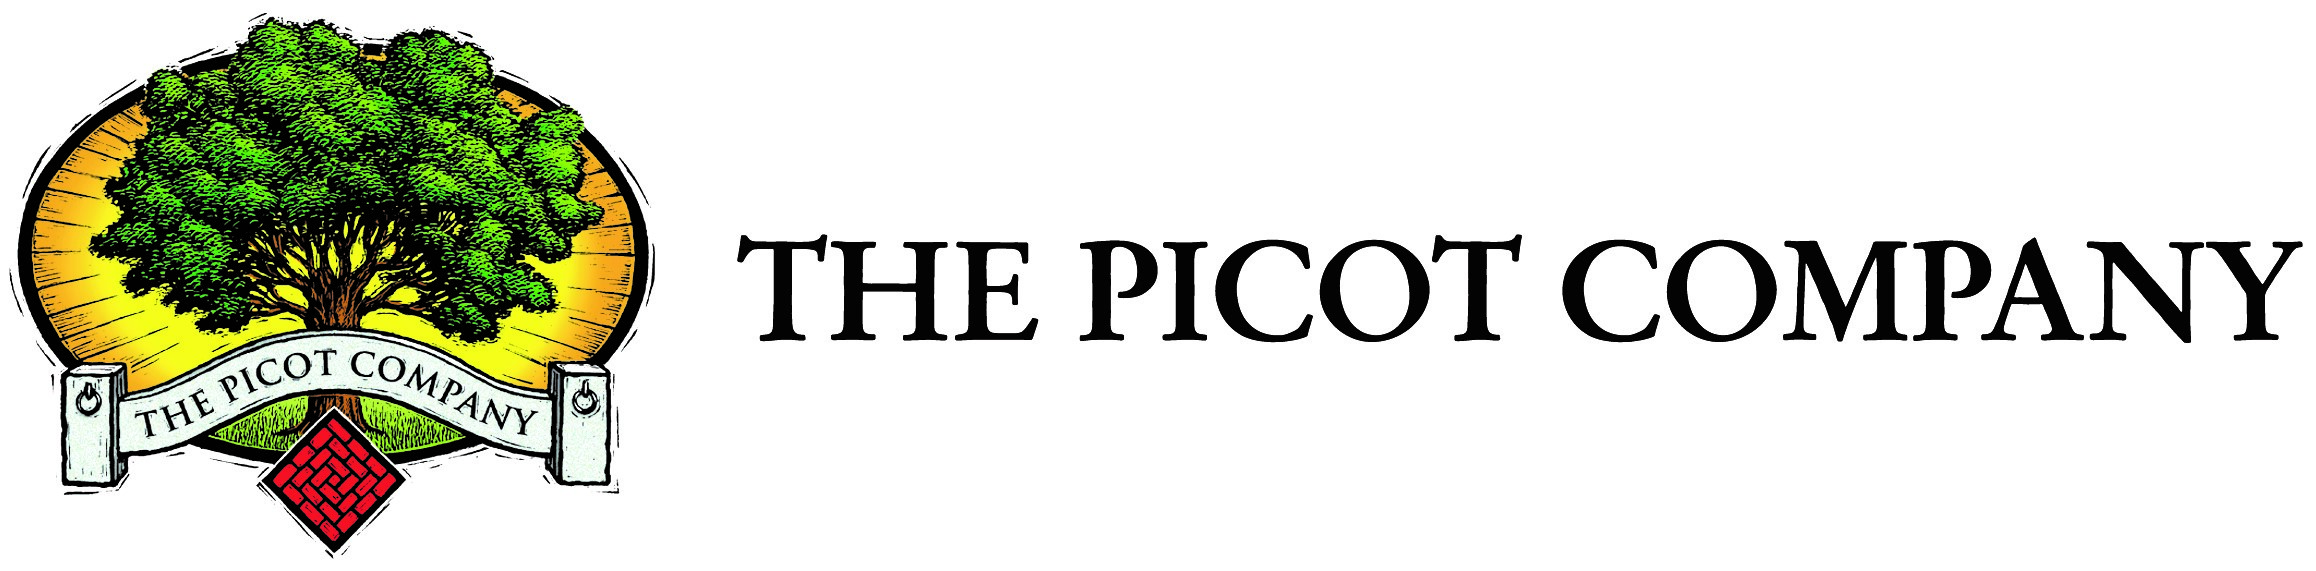 Picot Company logo